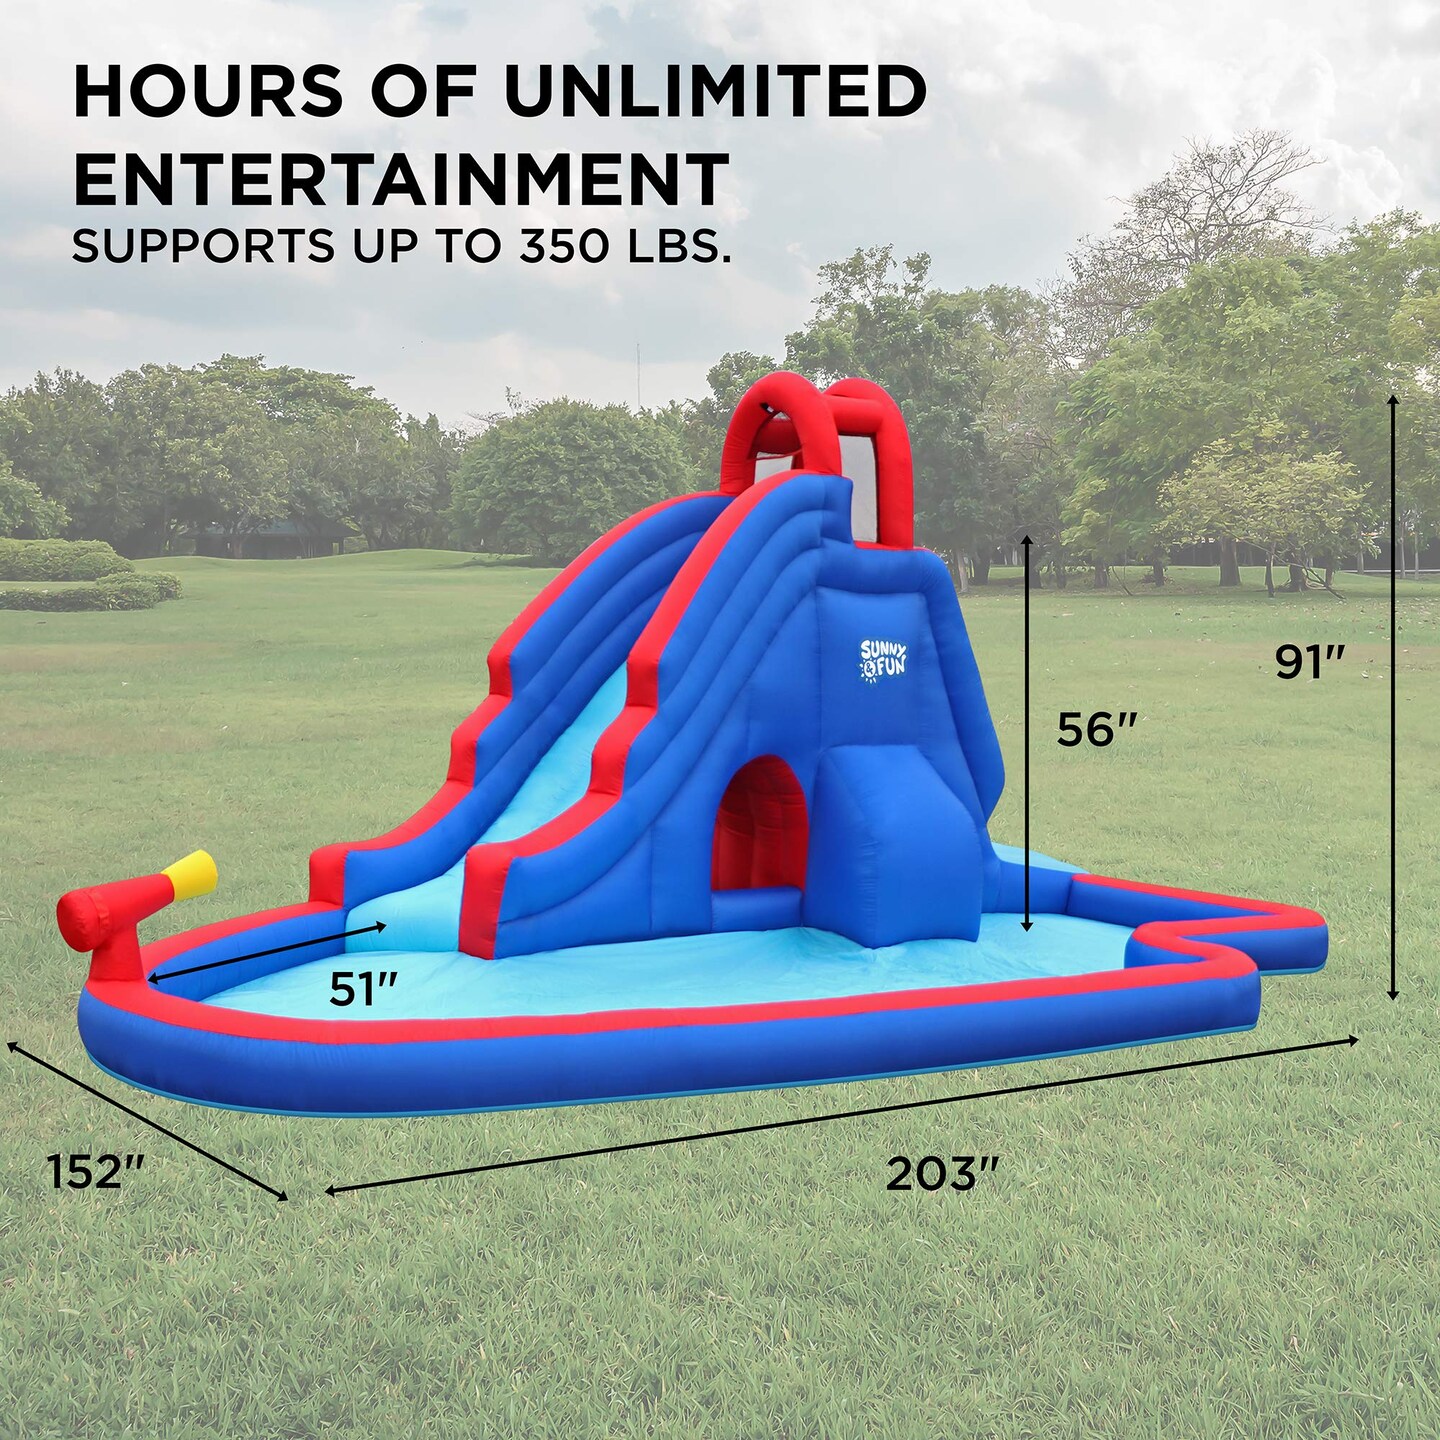 Sunny &#x26; Fun Inflatable Kids Backyard Water Slide Park with Splash Pool